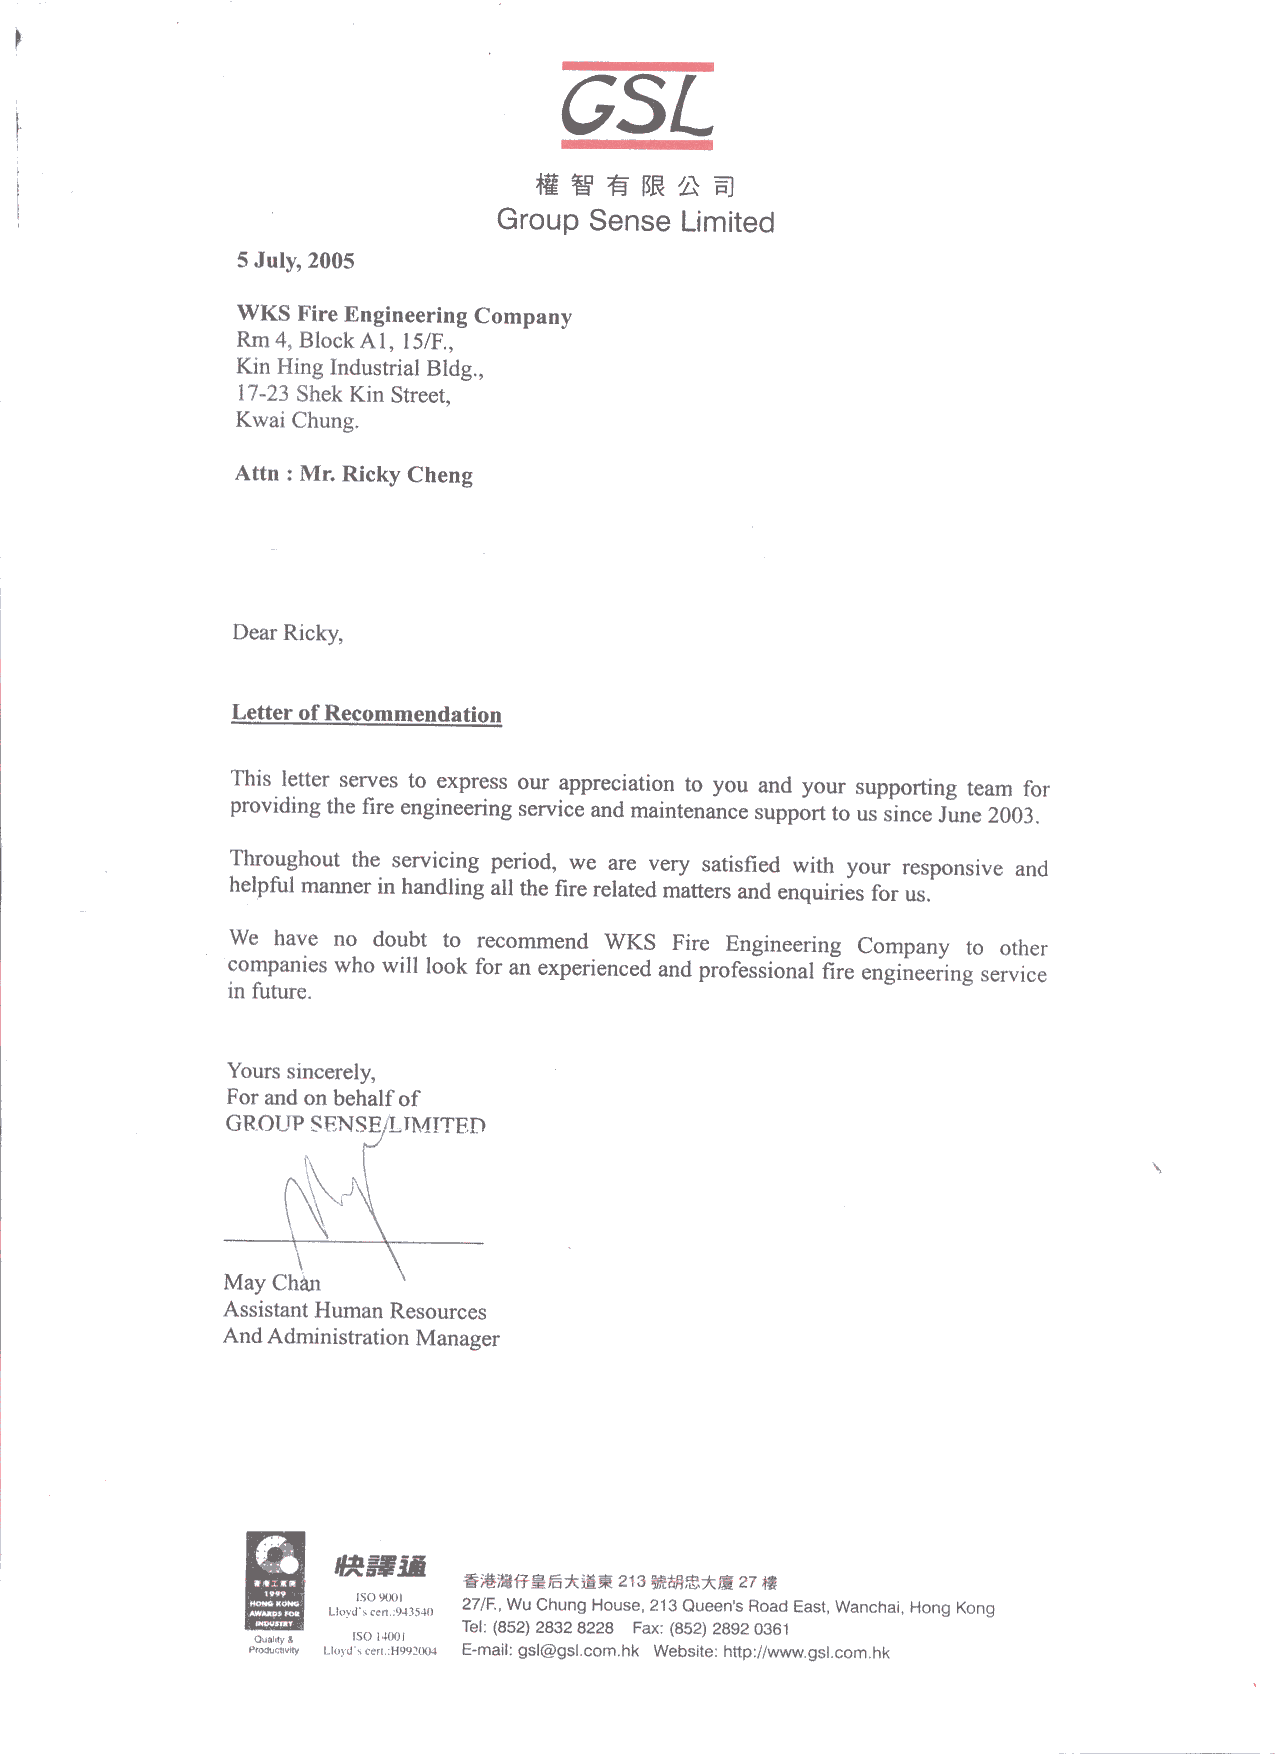 Letter of Appreciation from Group Sense Ltd.